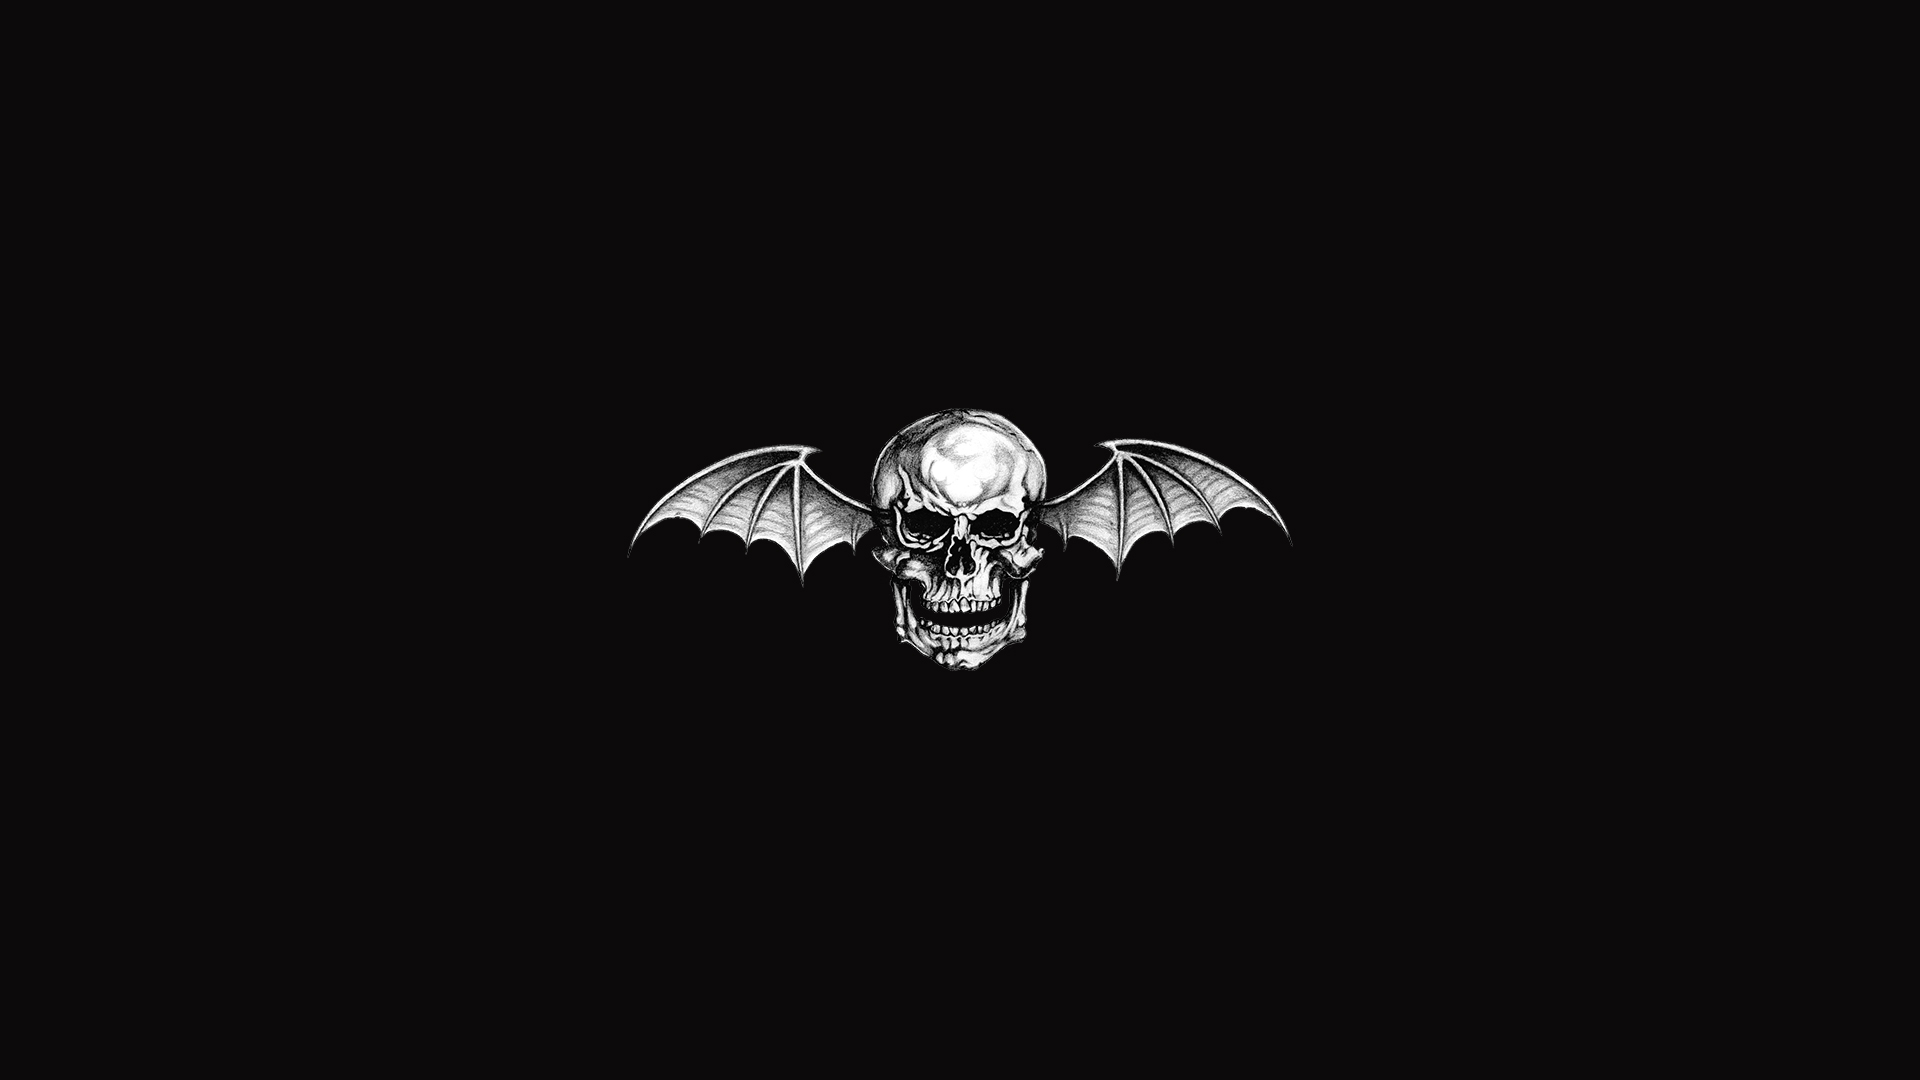 Avenged Sevenfold Deathbat Band Logo Band Mascot Heavy Metal Hard Rock Metalcore Rock Bands Metal Ba 1920x1080